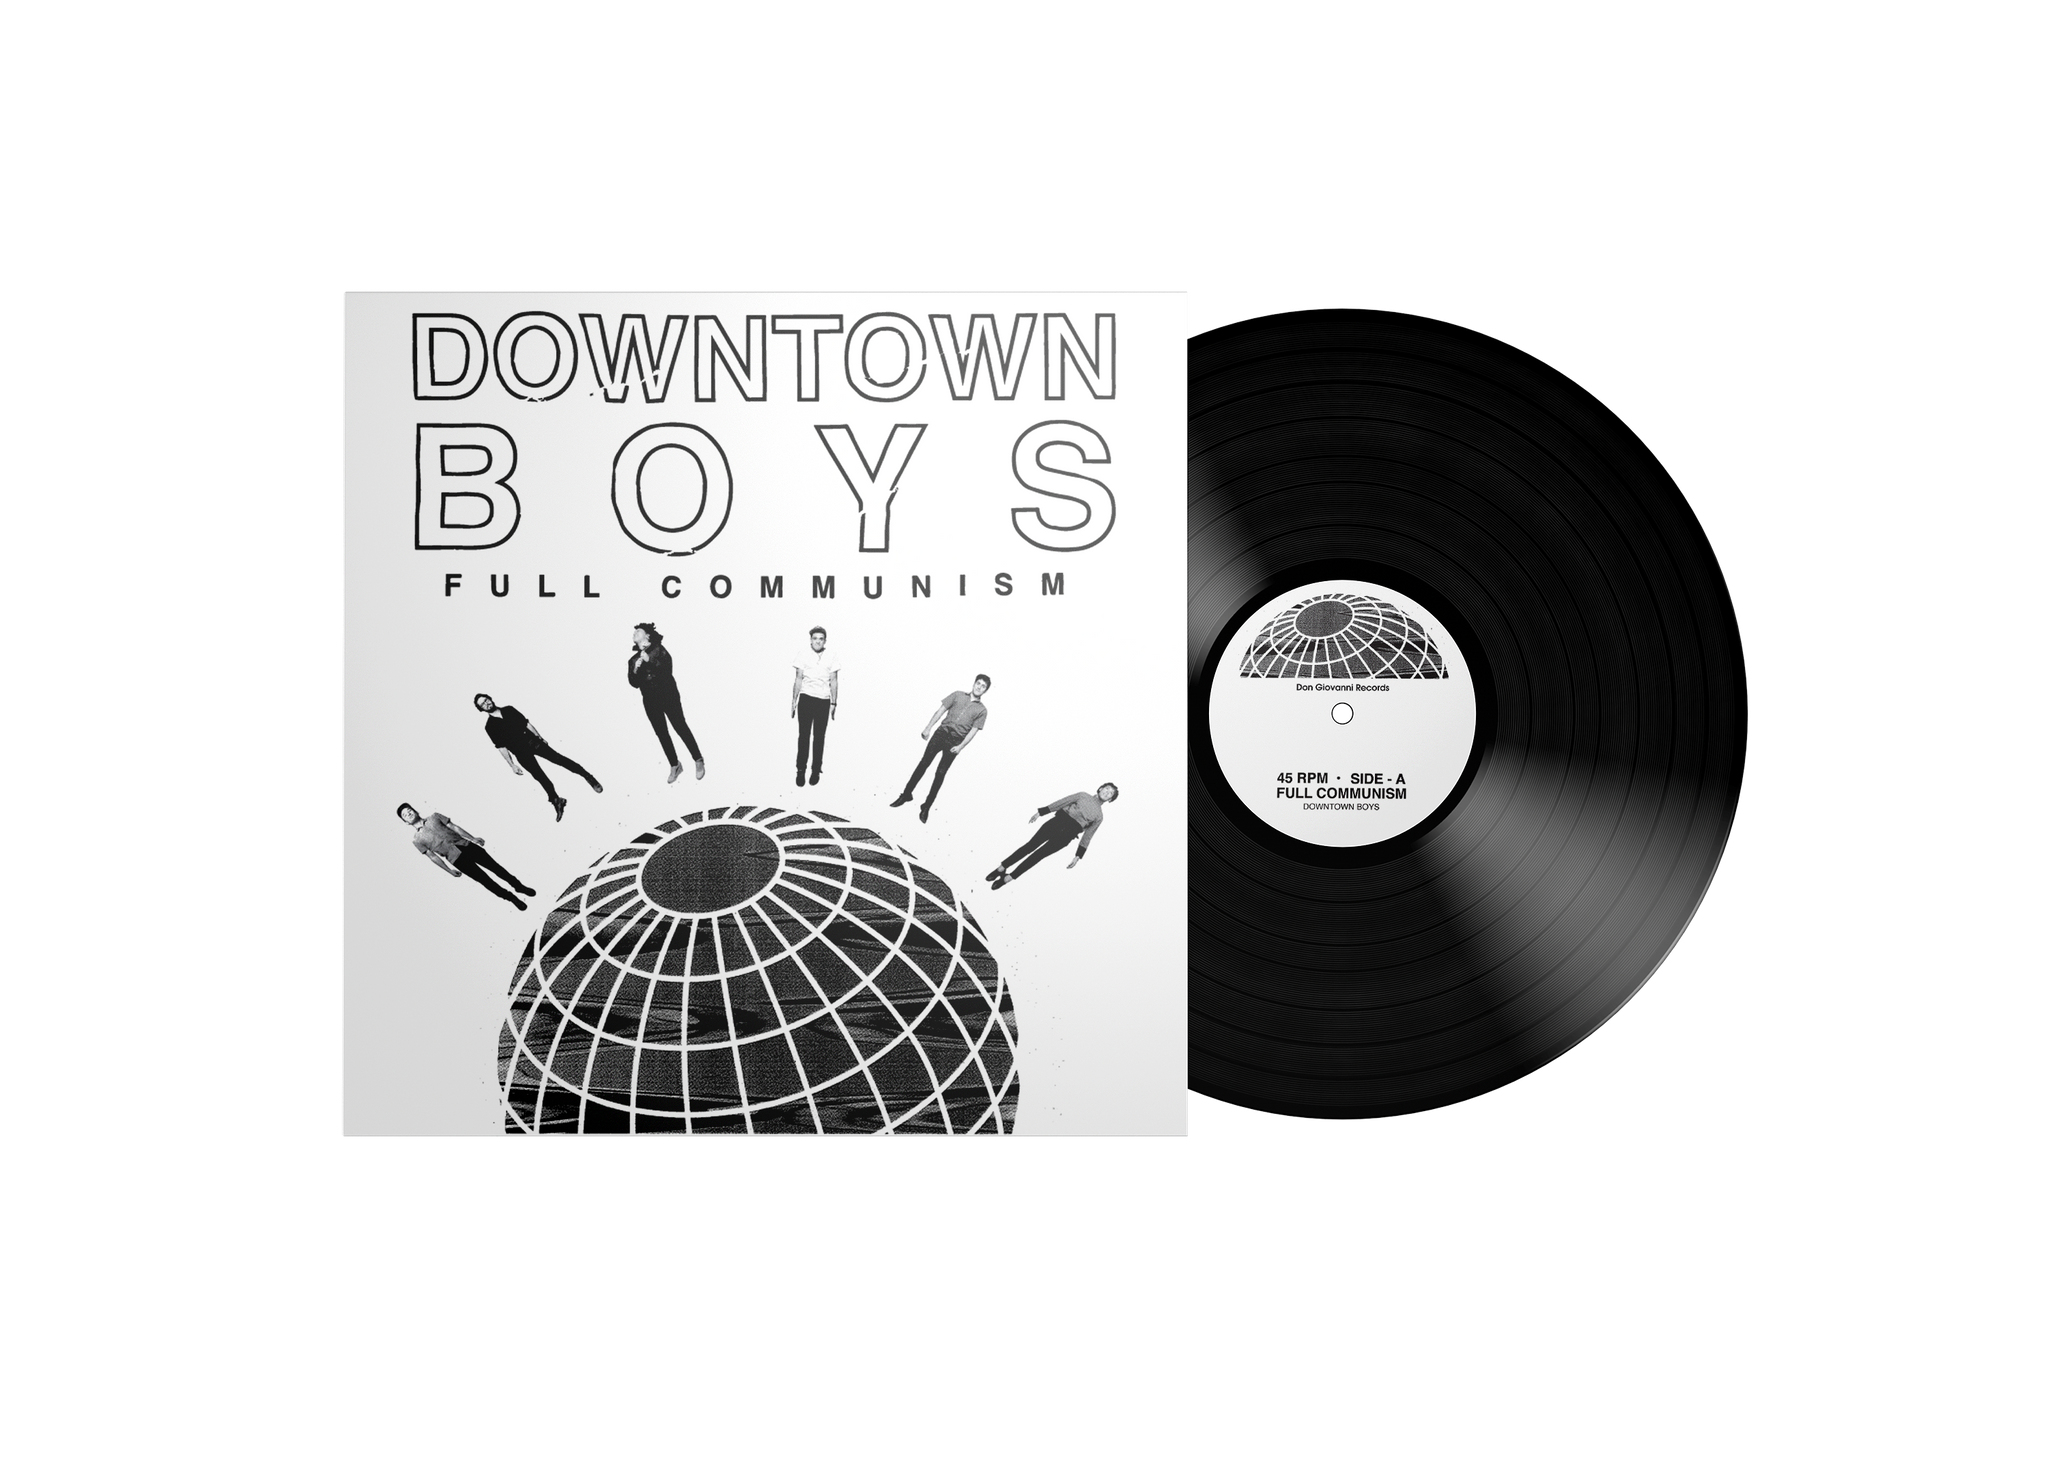 Downtown Boys "Full Communism" 12"